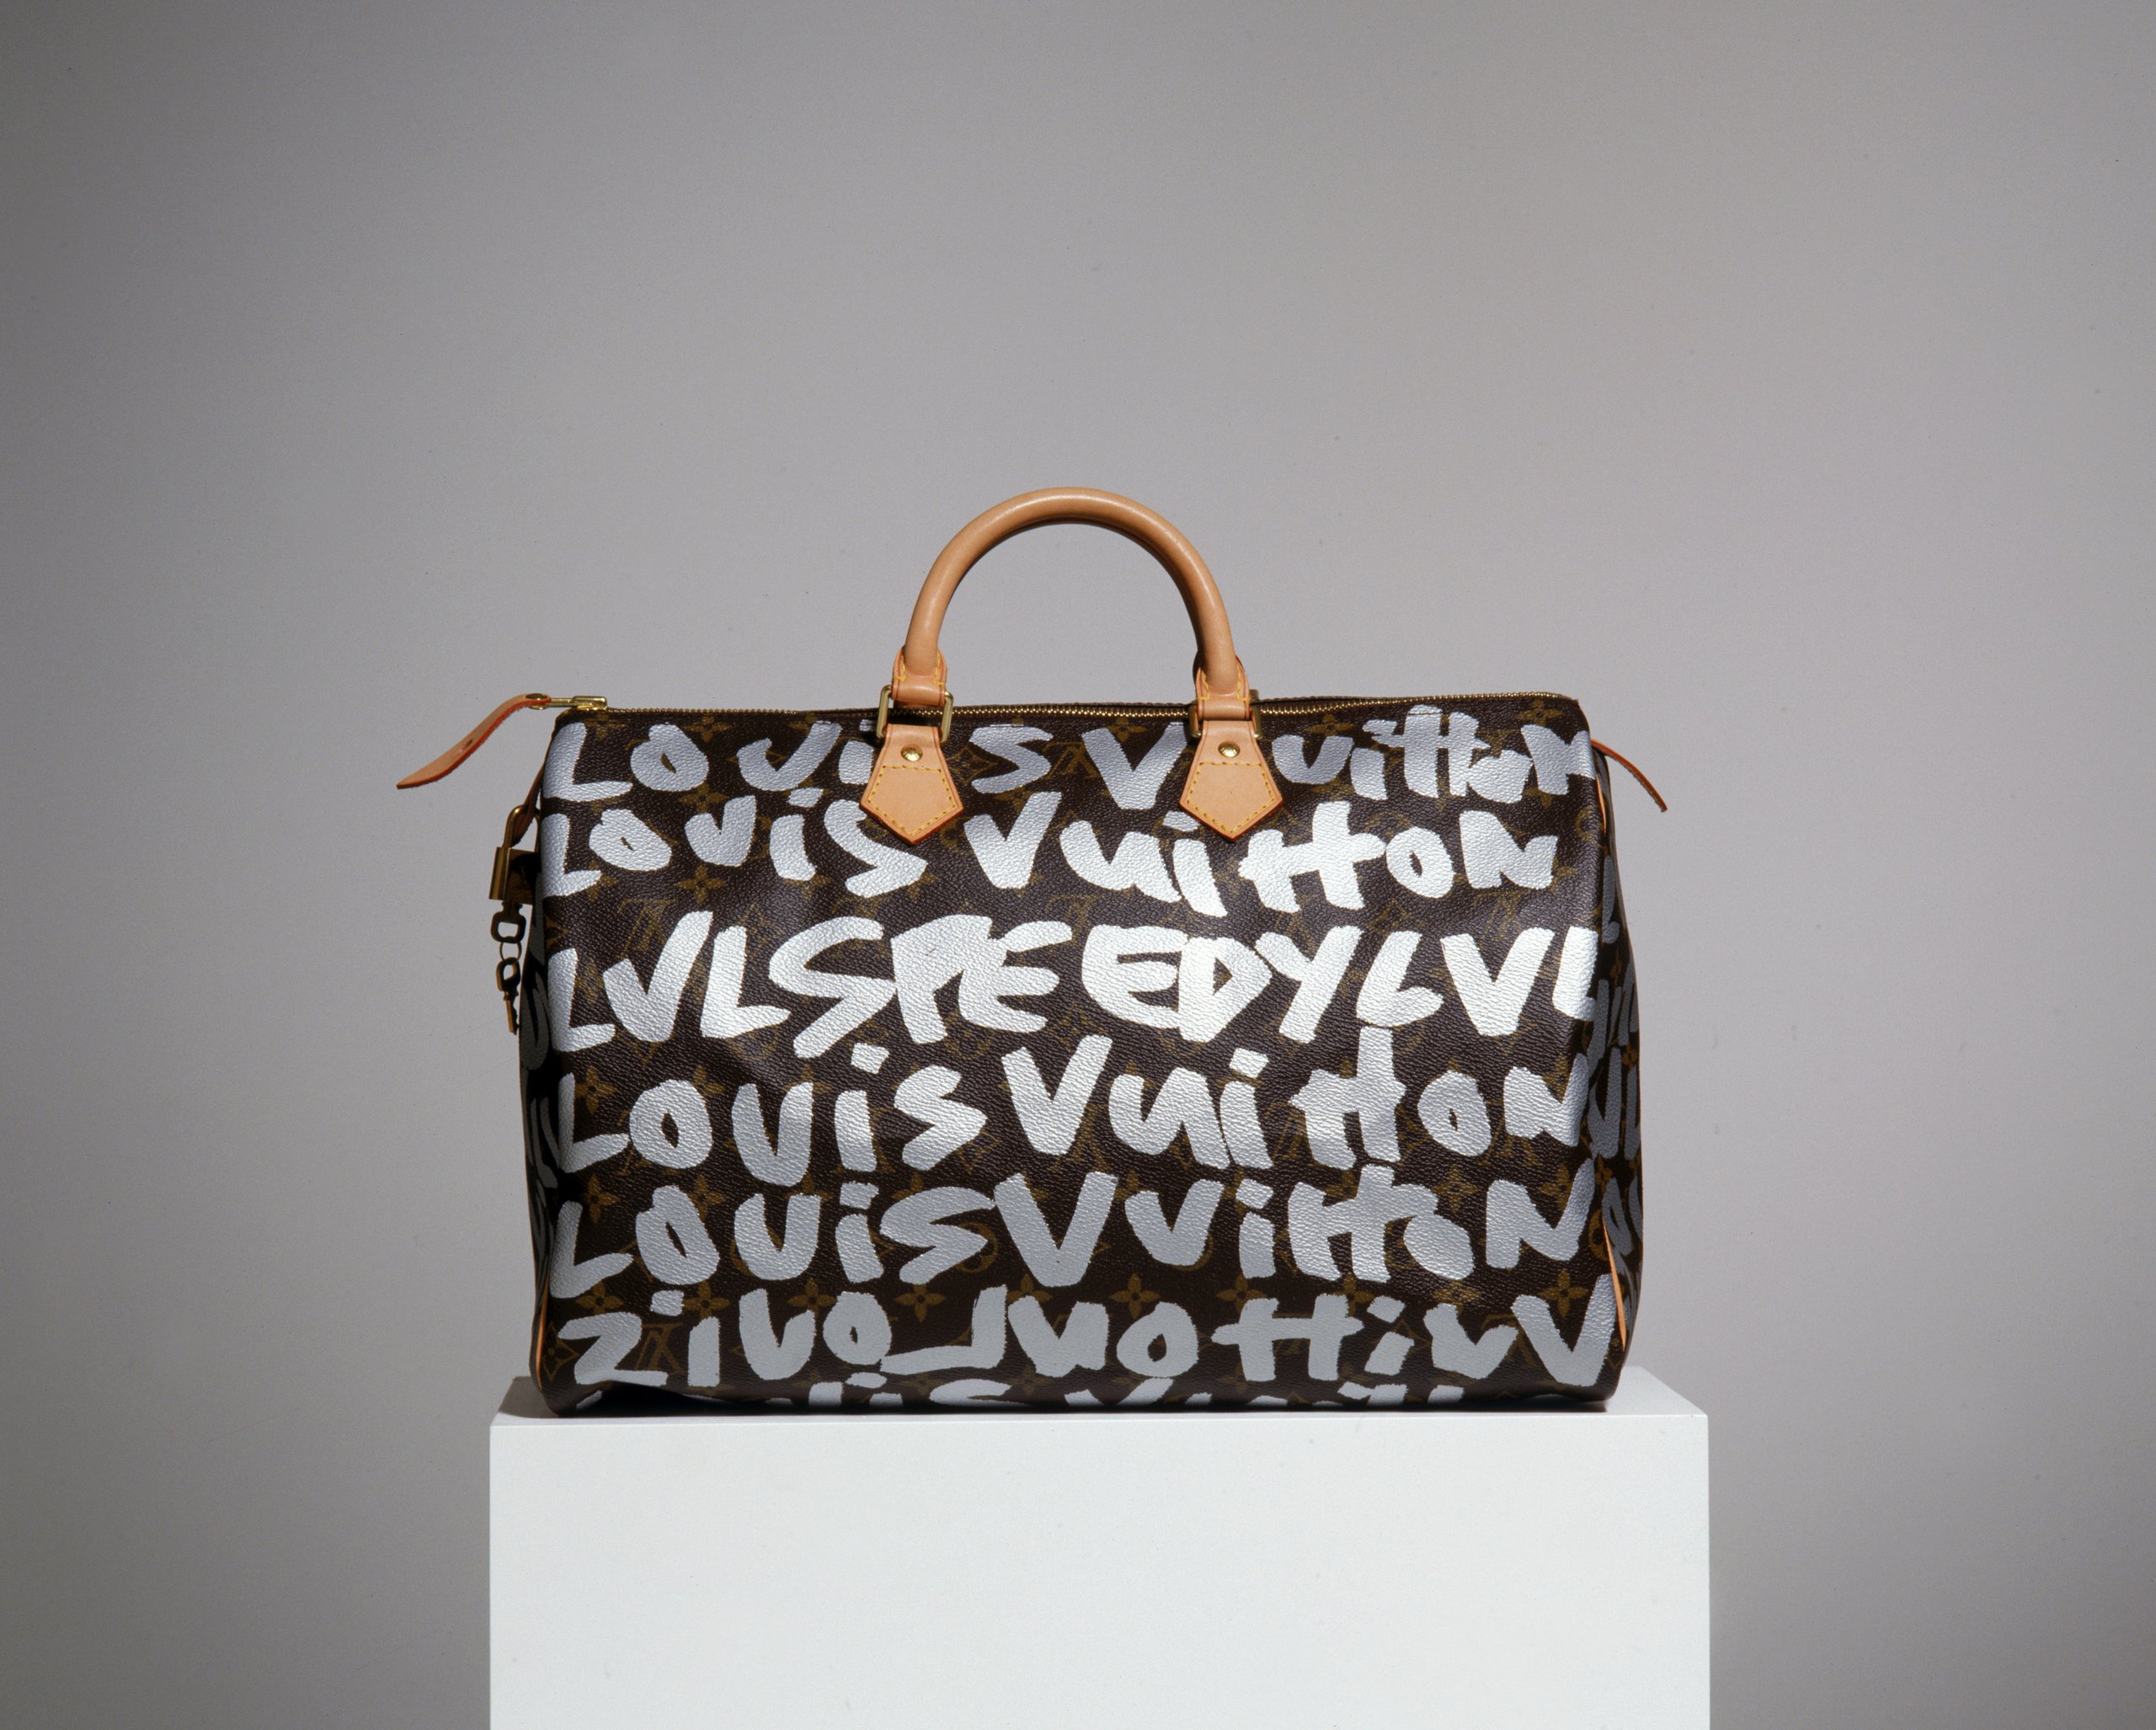 Marc Jacobs Speedy style bag with graffiti logo